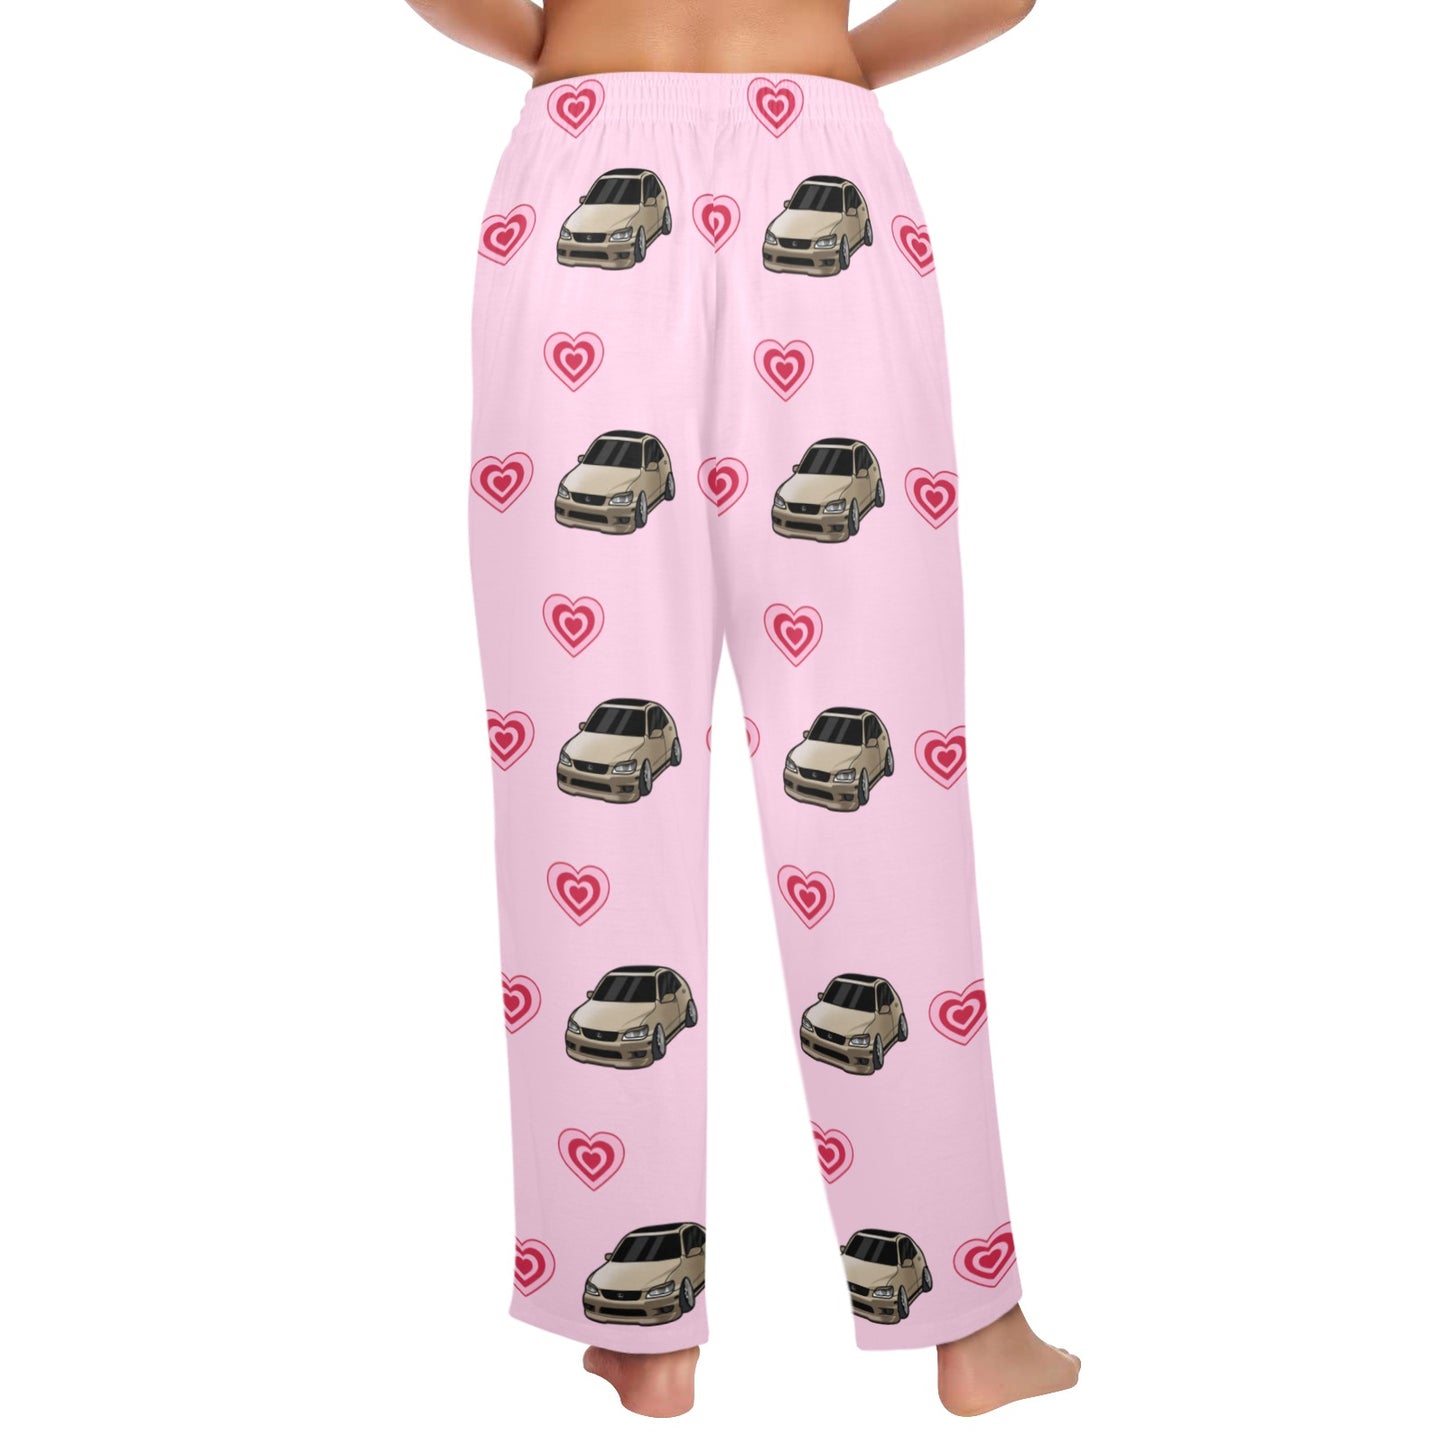 IS300 Heart Pajama Pants Women